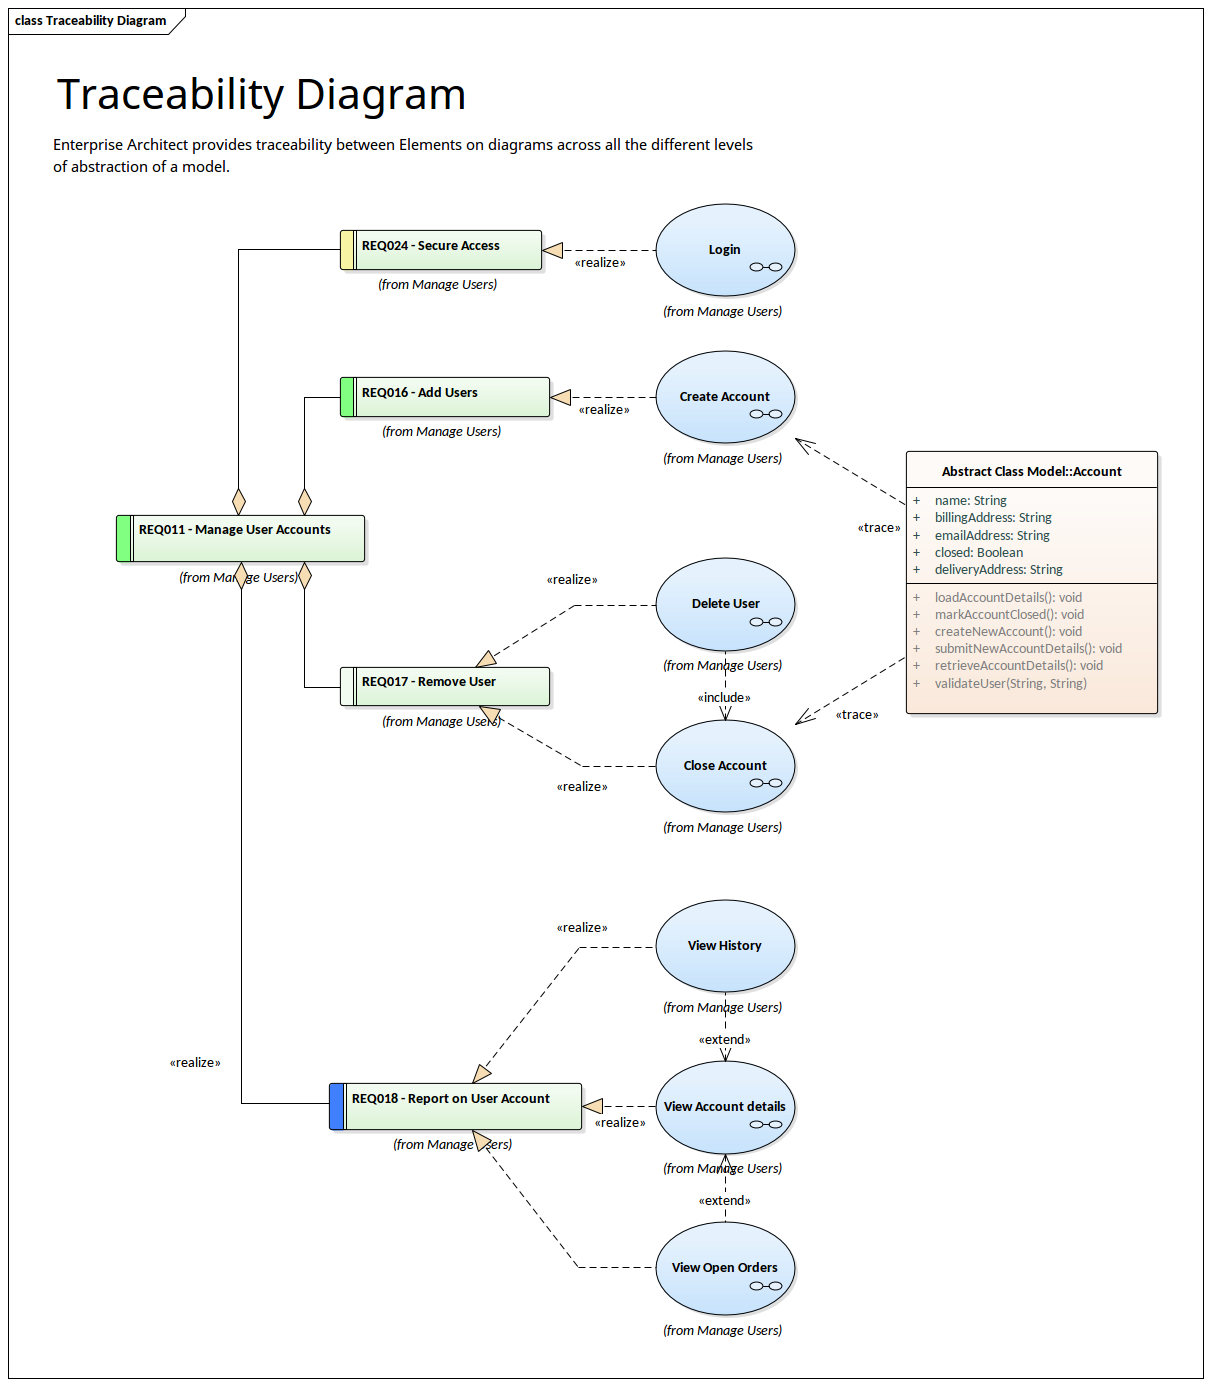 Example of Traceability Diagram